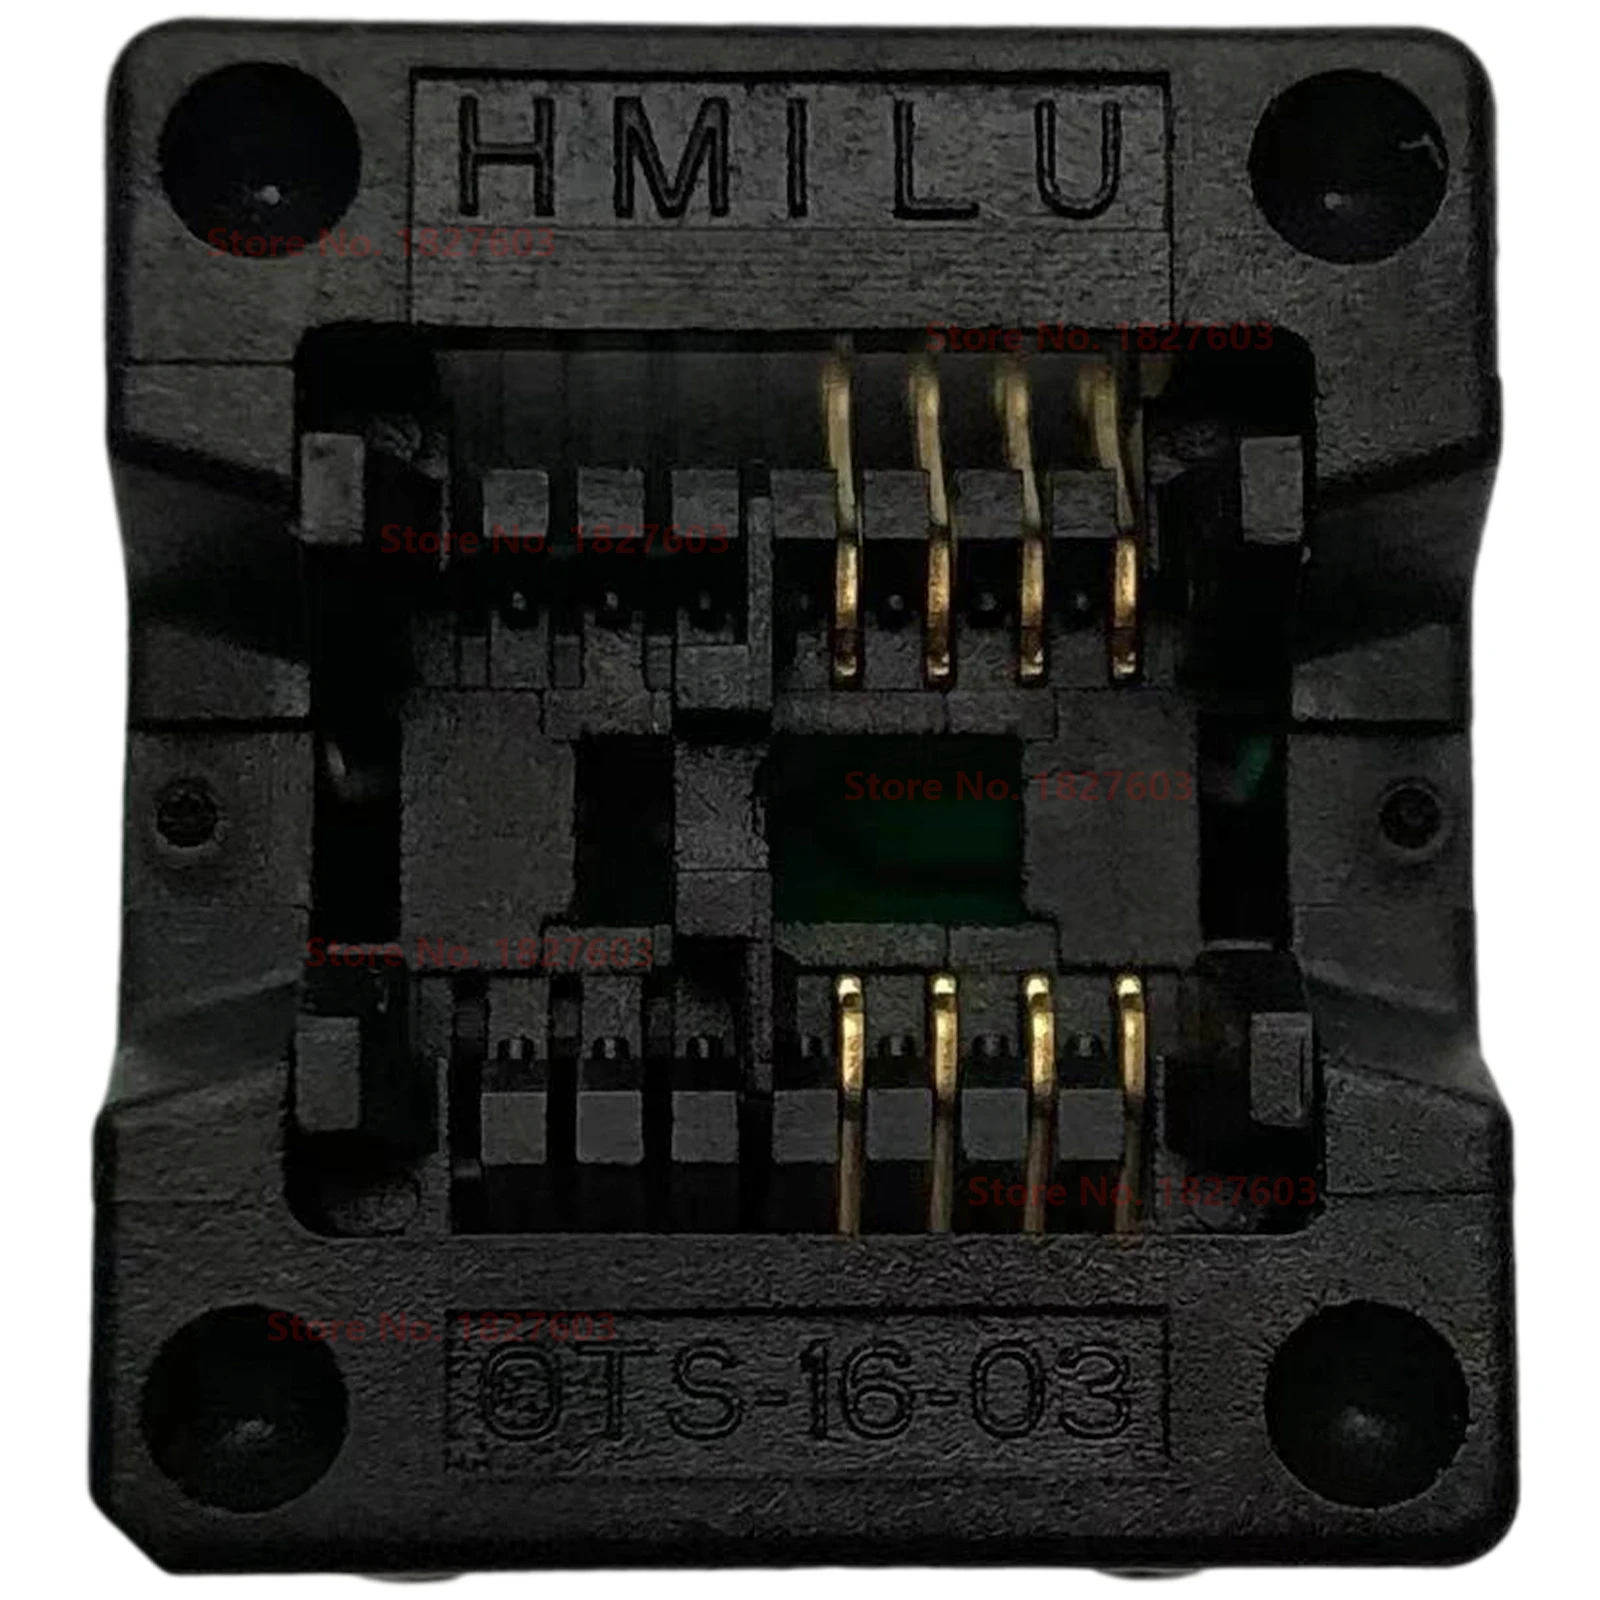 150mil SOP8 Socket Adapter for Universal Programmer 